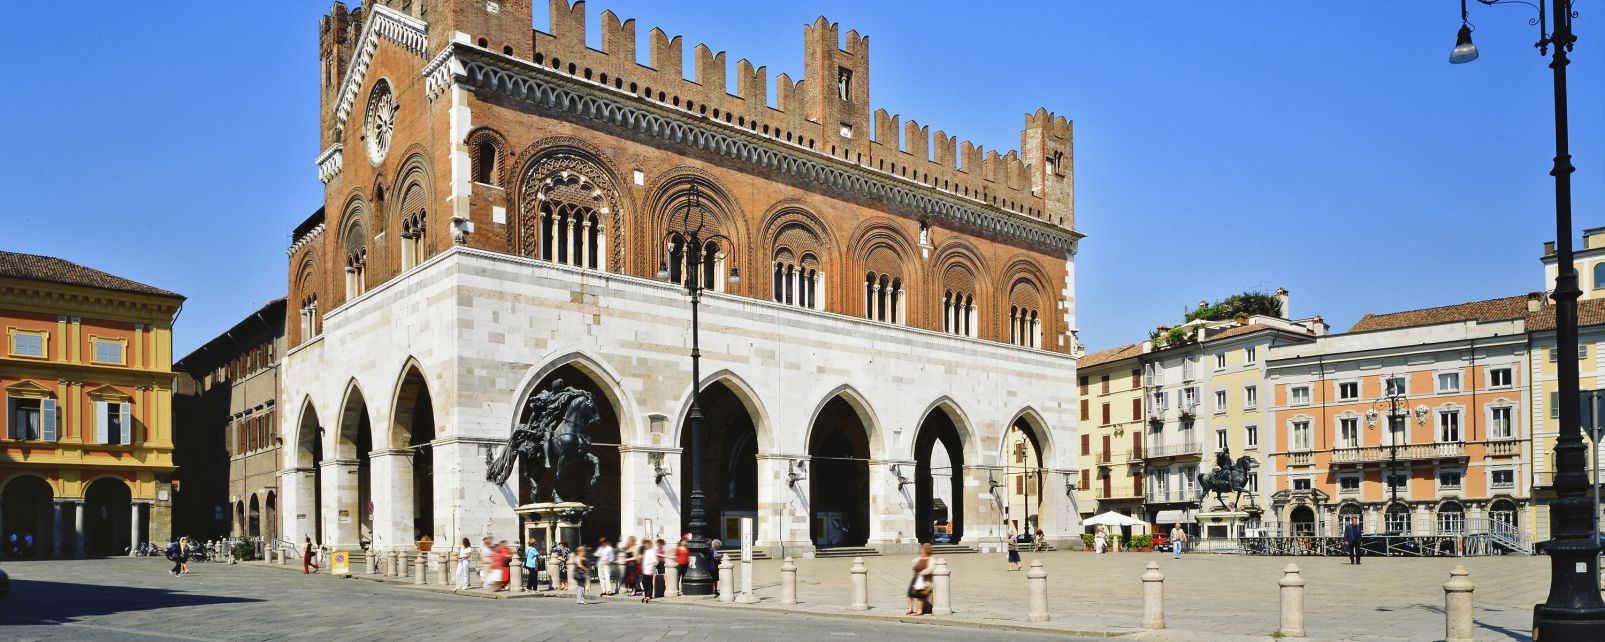 Travel to Piacenza, Italy - Piacenza Travel Guide - Easyvoyage